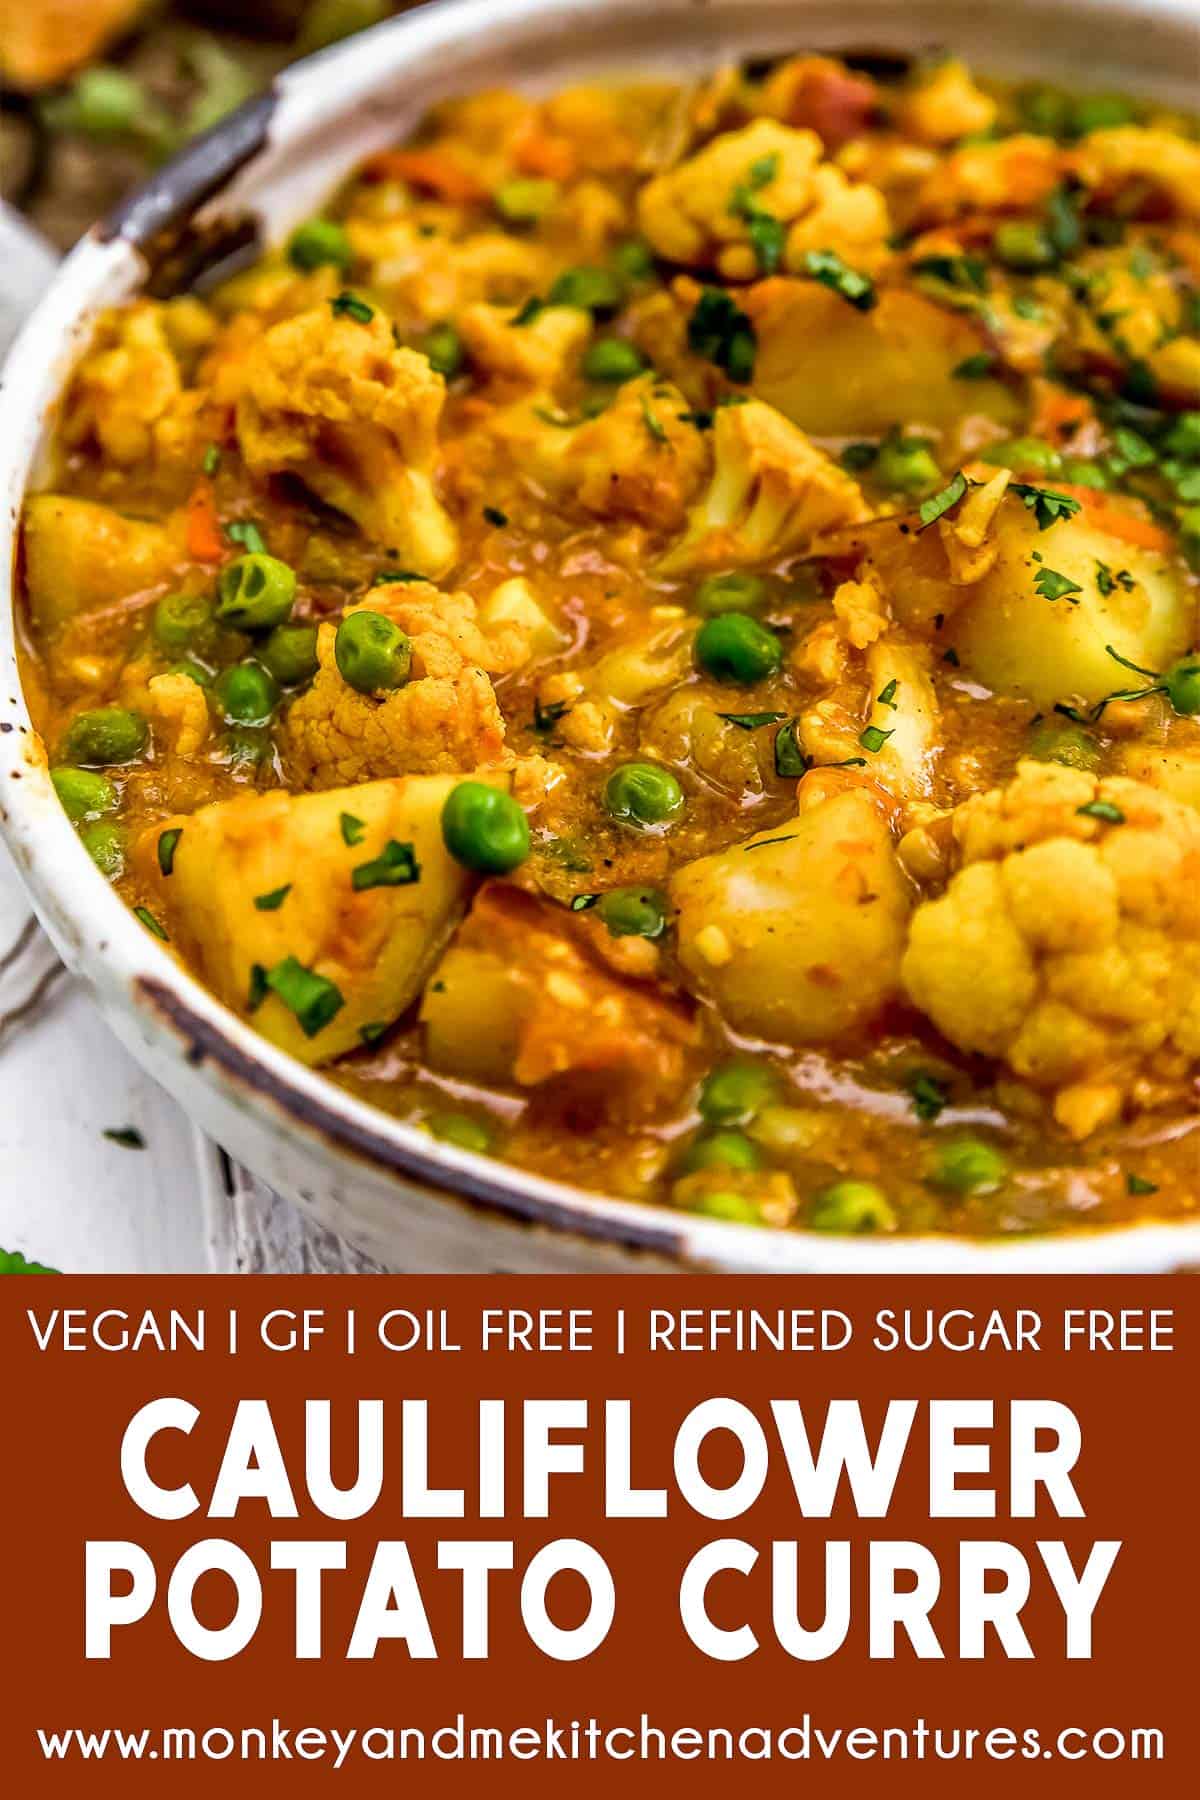 Cauliflower Potato Curry with text description